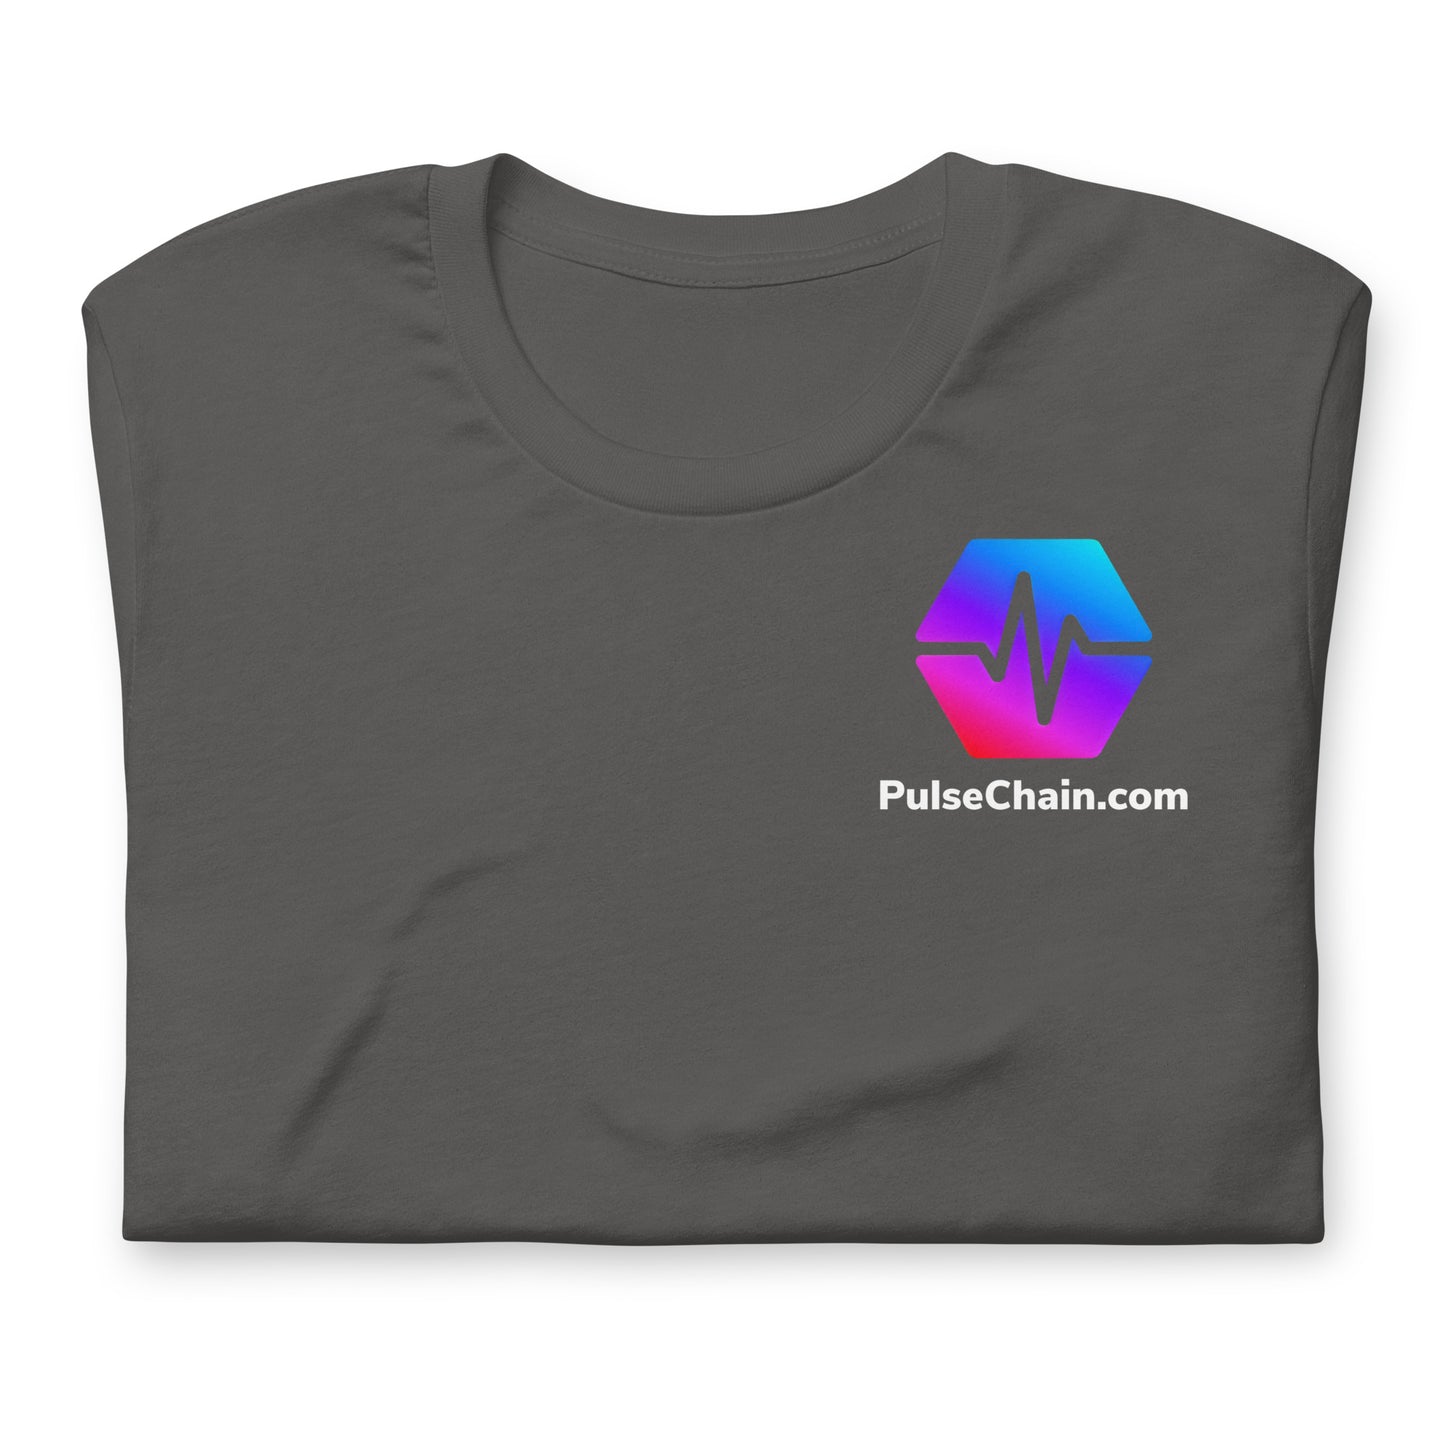 PulseChain.com Unisex T-Shirt